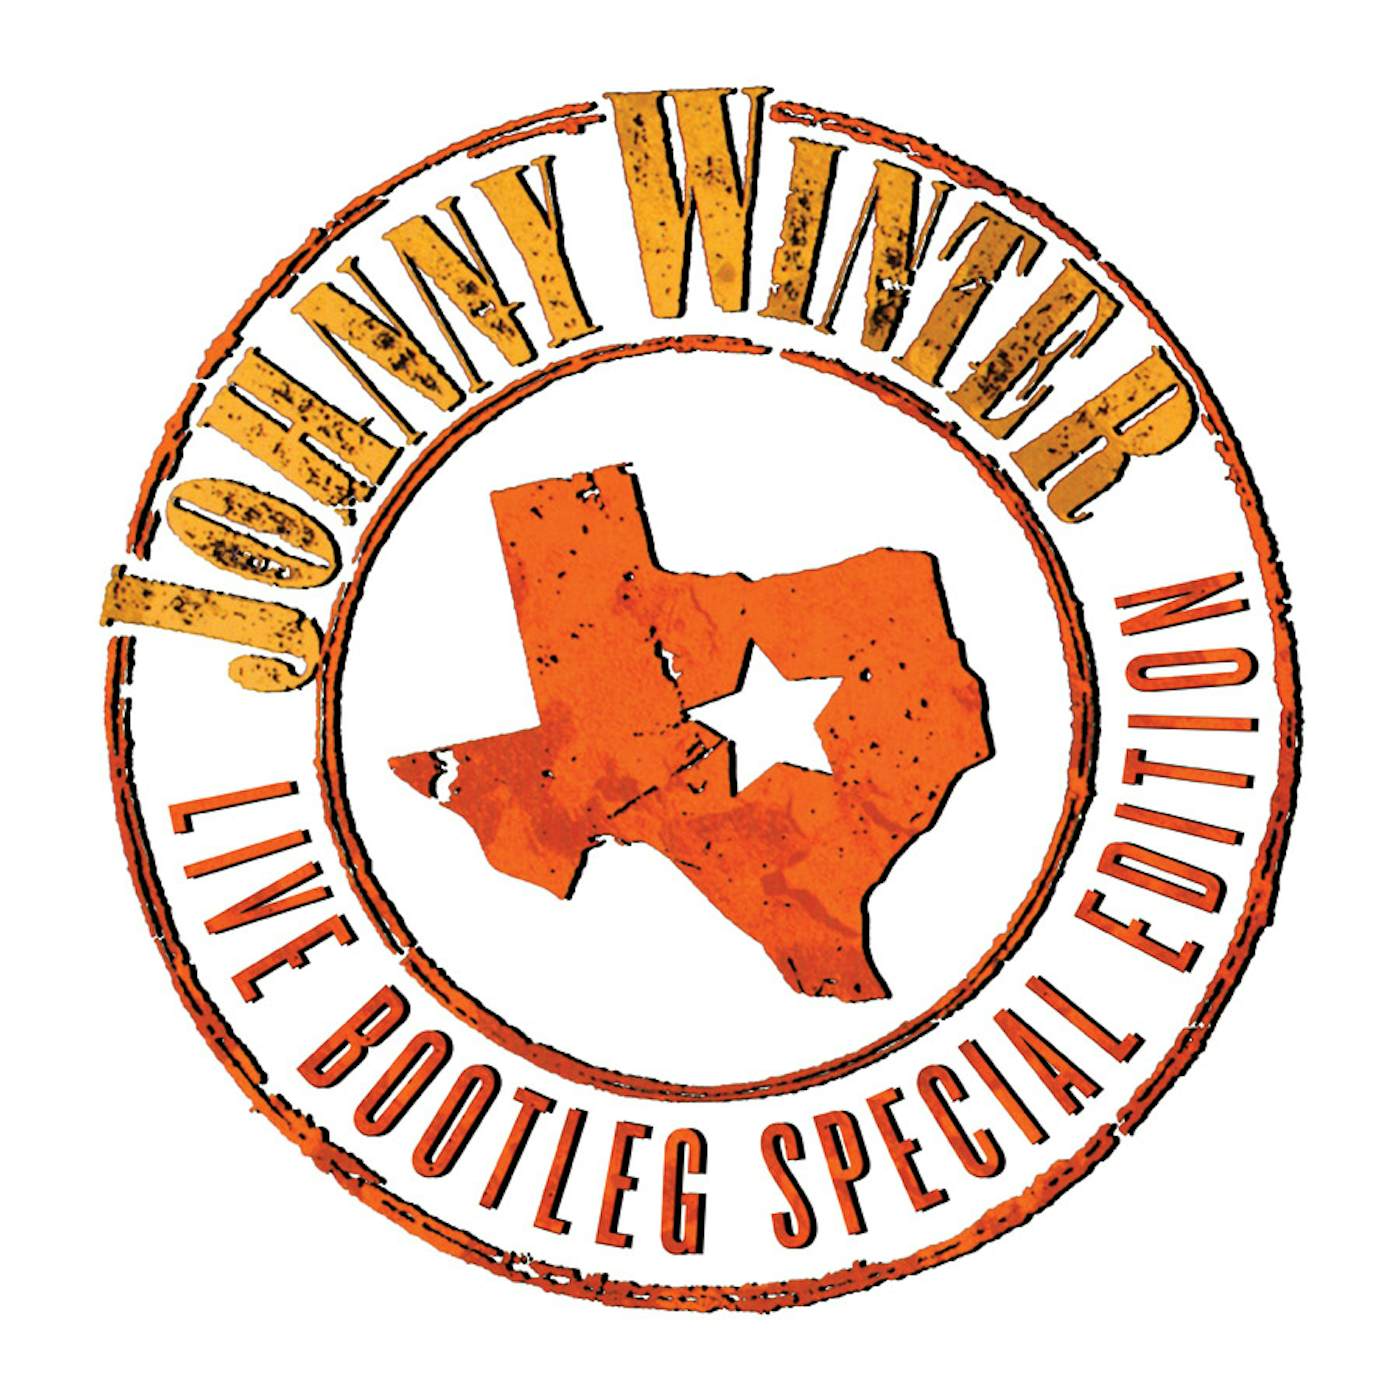 Johnny Winter LIVE BOOTLEG SPECIAL EDITION Vinyl Record